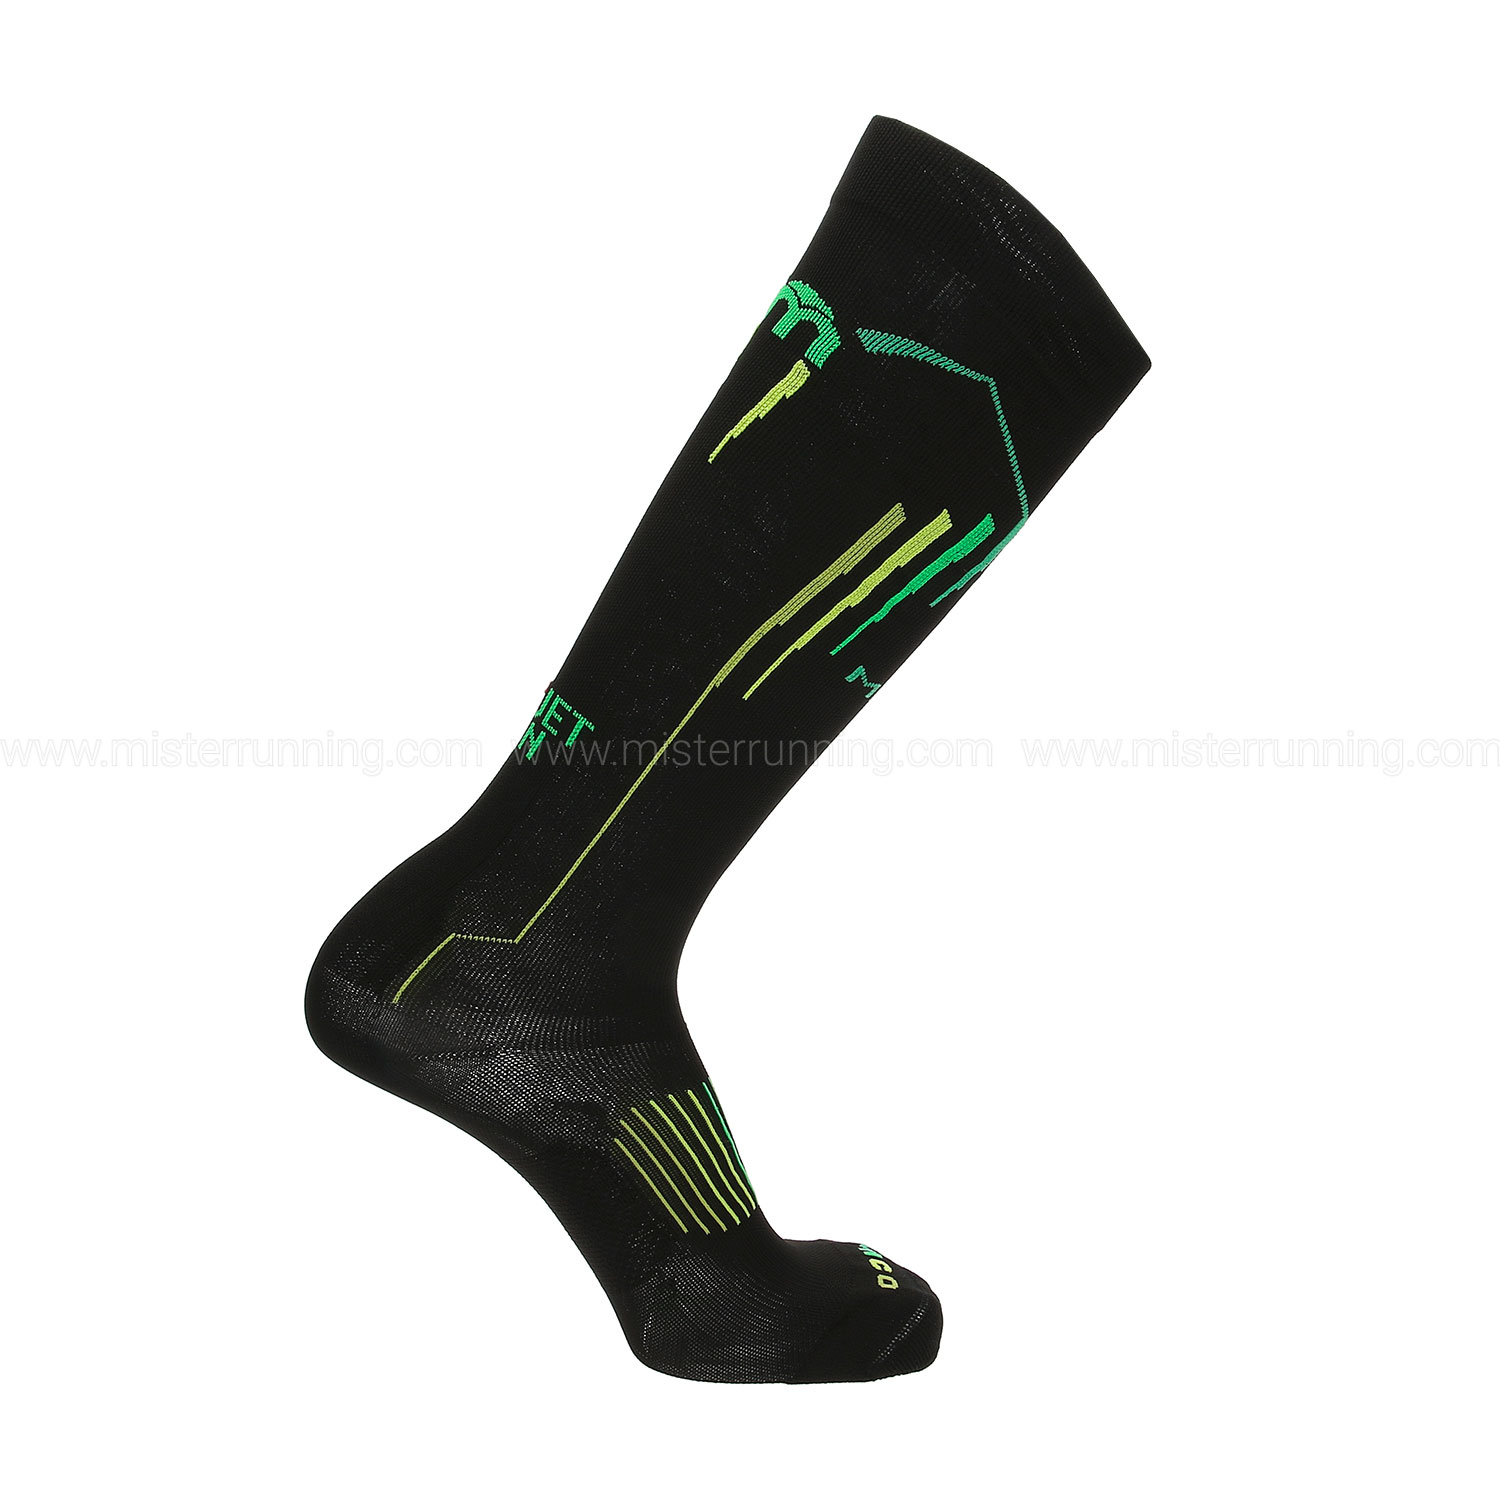 Mico Compression Oxi-Jet Light Weight Socks - Nero/Verde Fluo